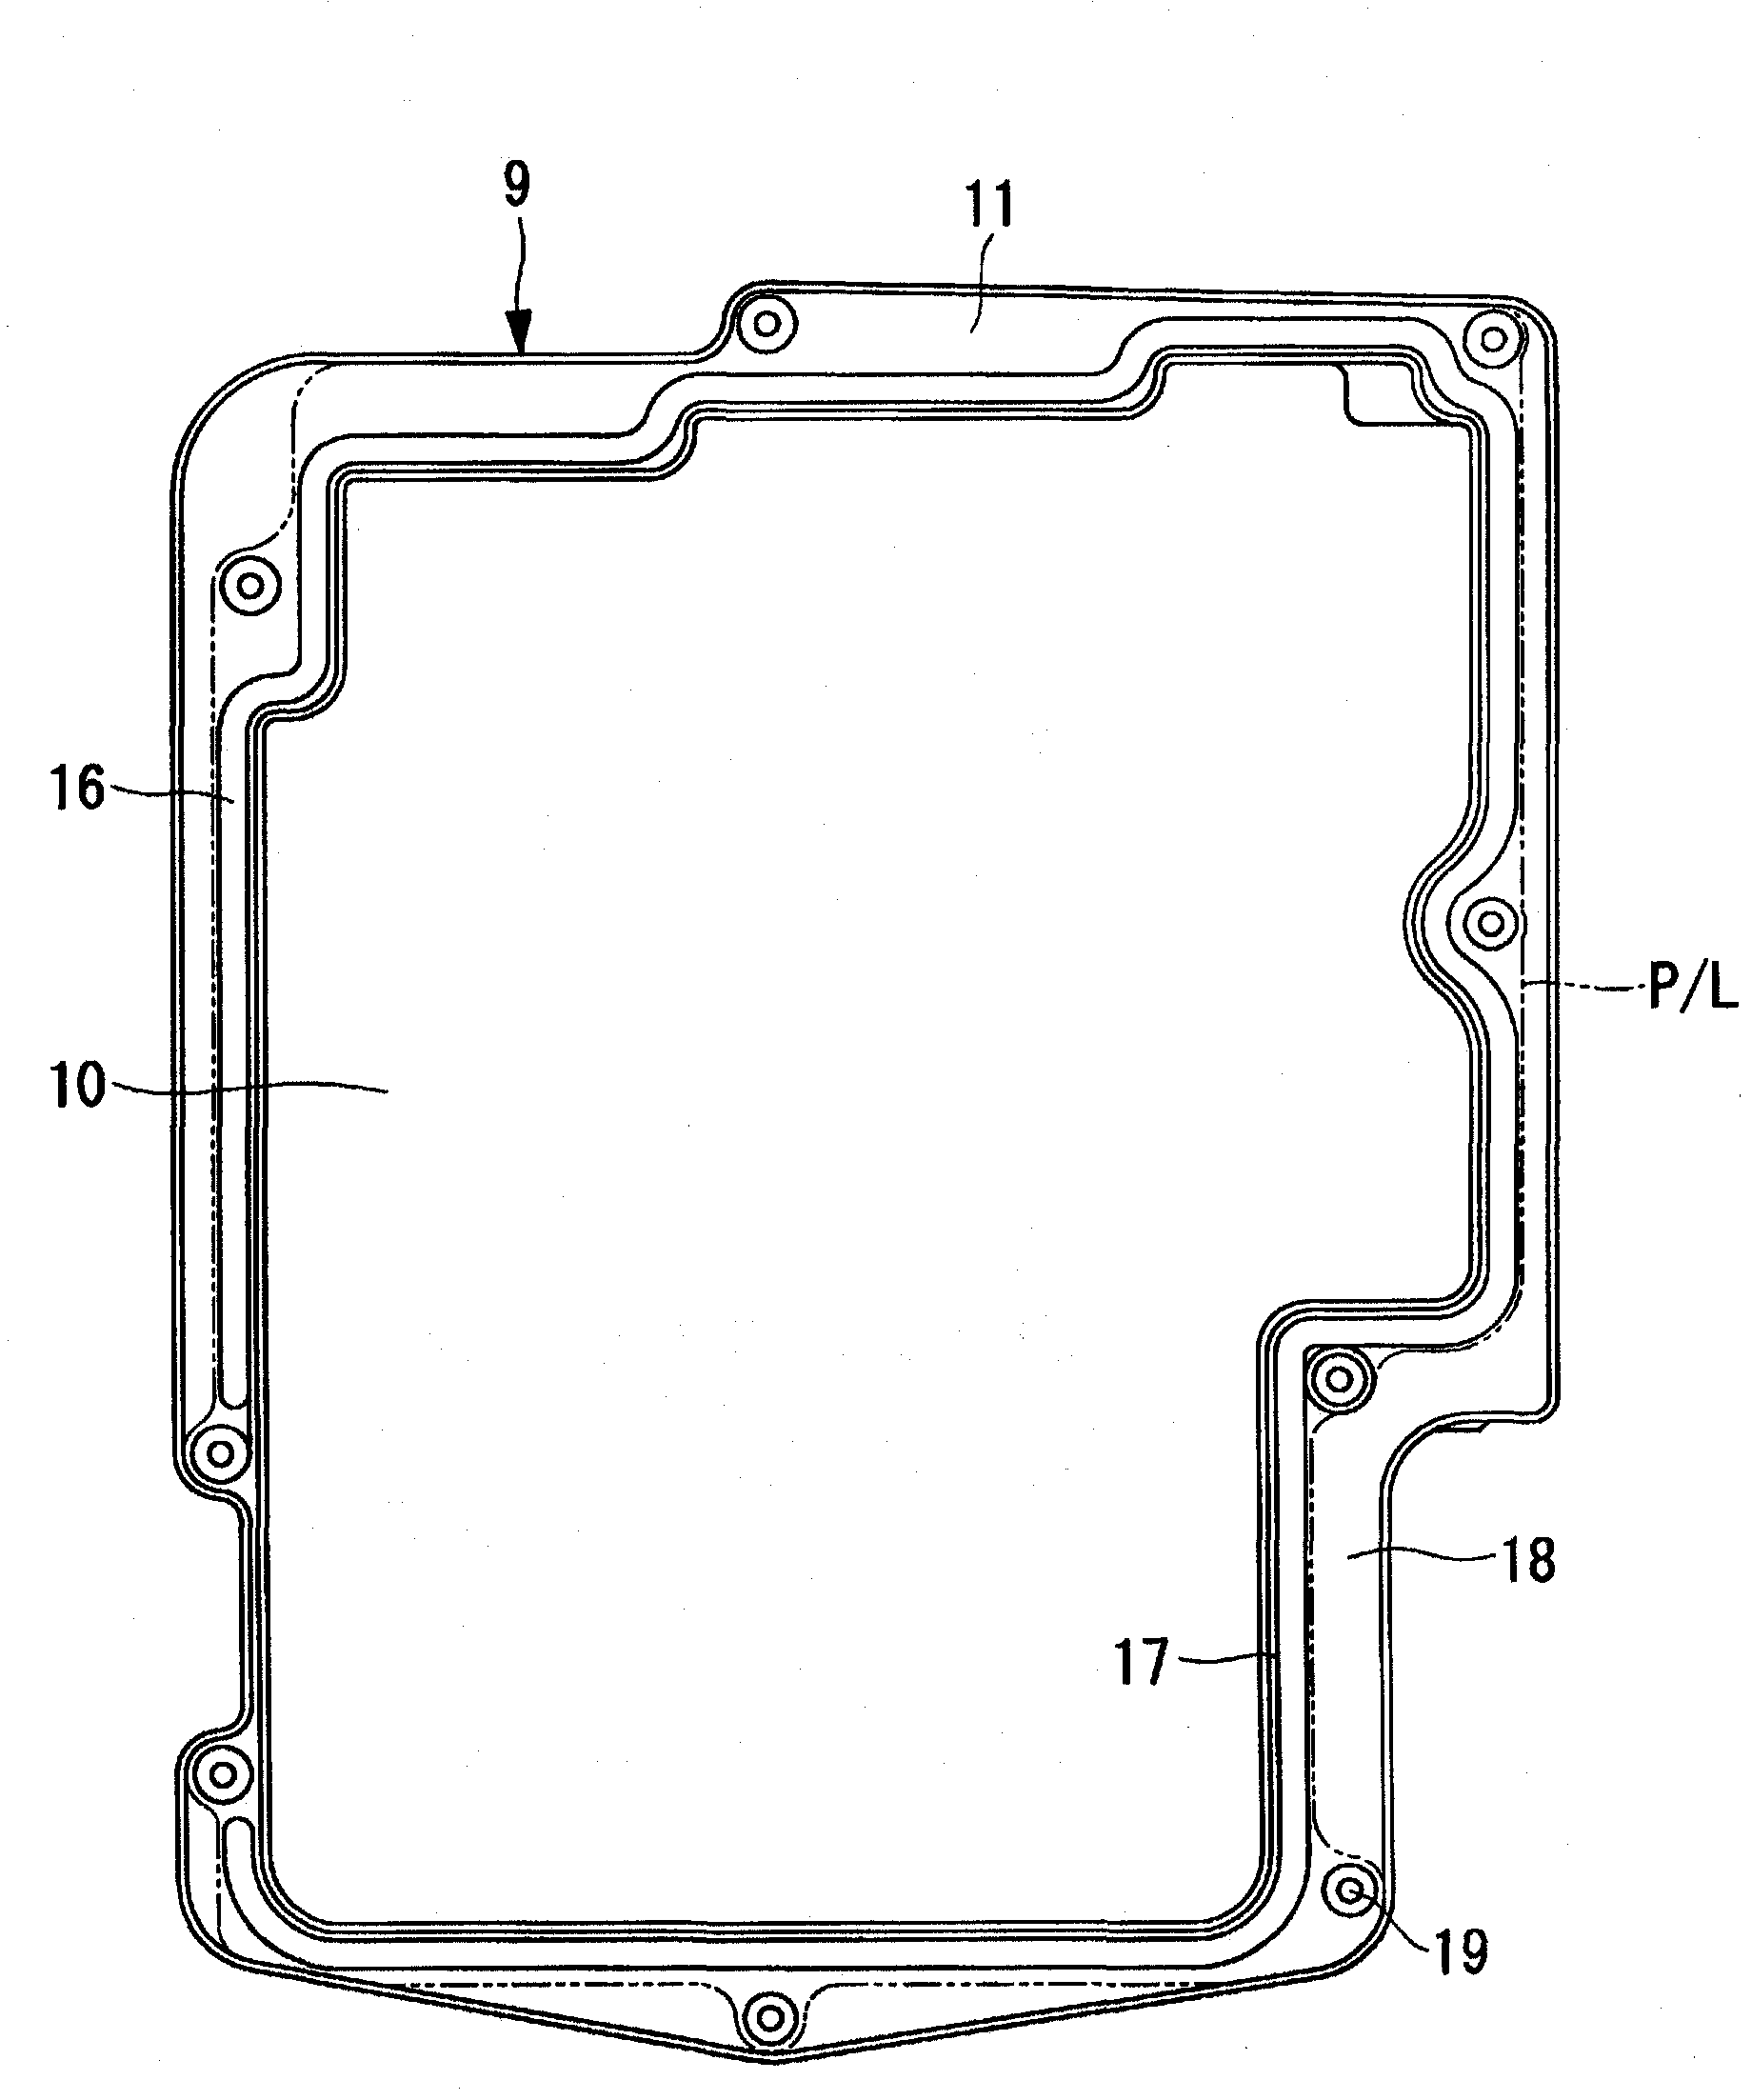 Electric compressor integral with inverter